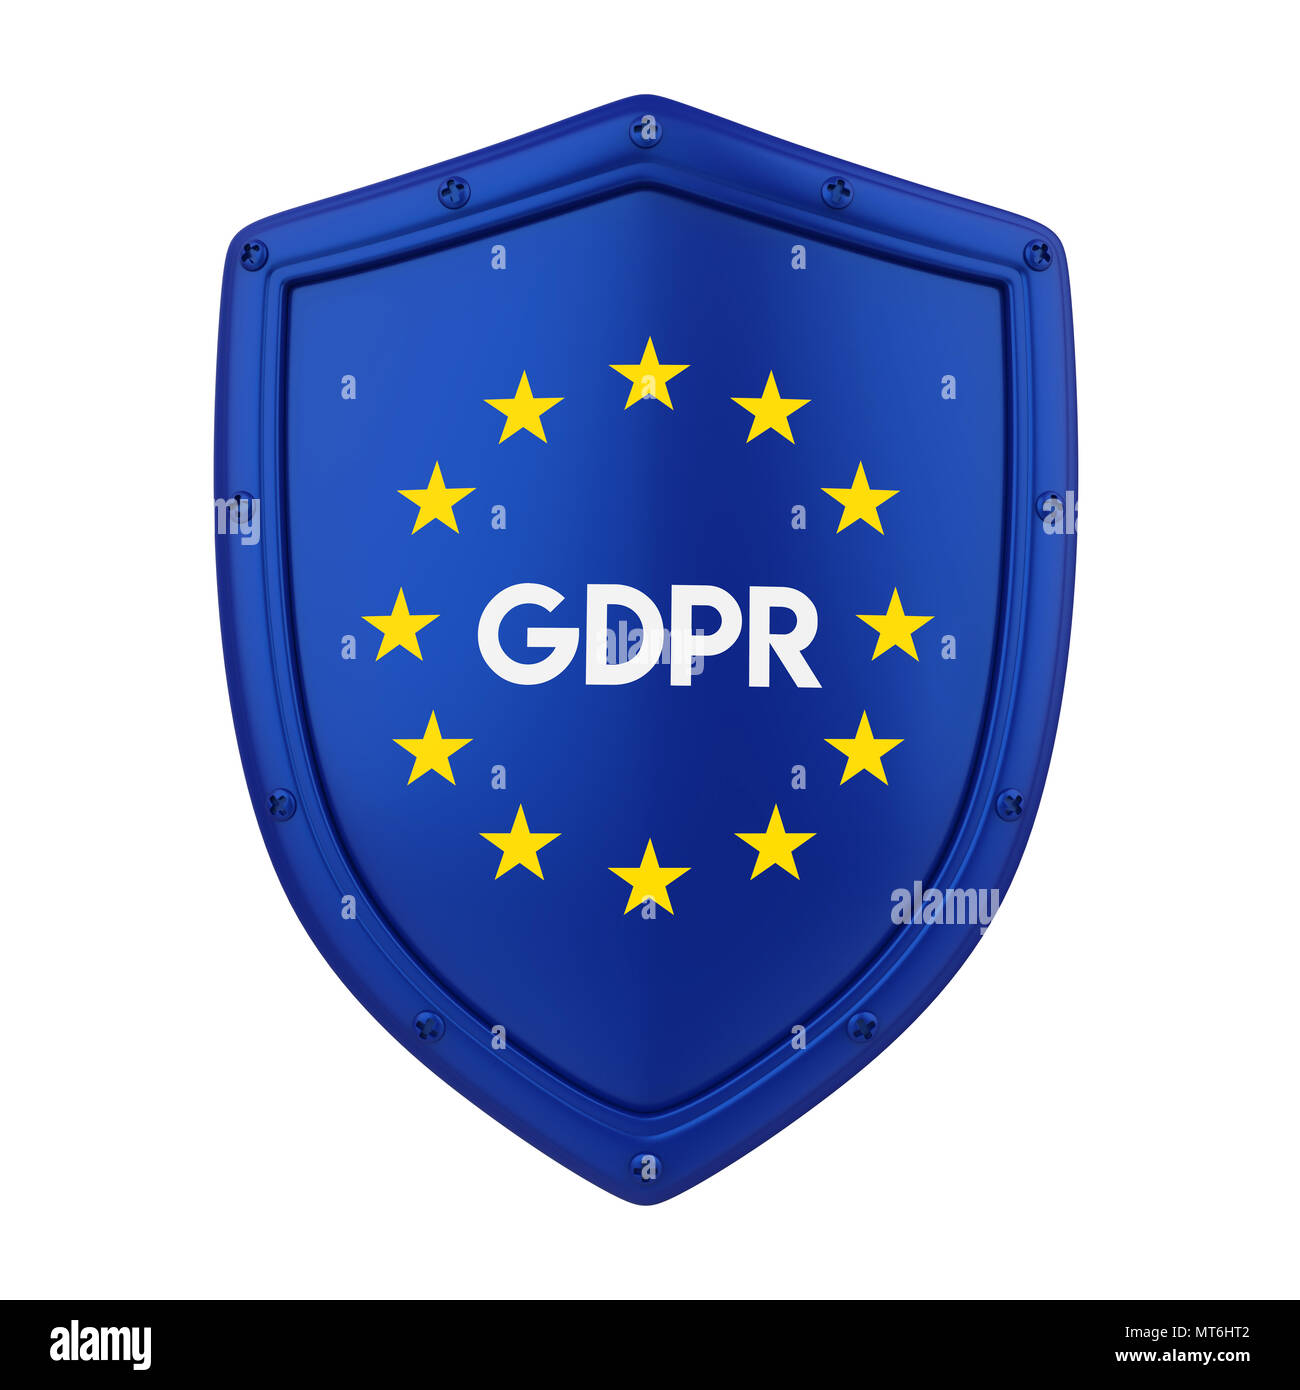 GDPR - General Data Protection Regulation Illustration Stock Photo